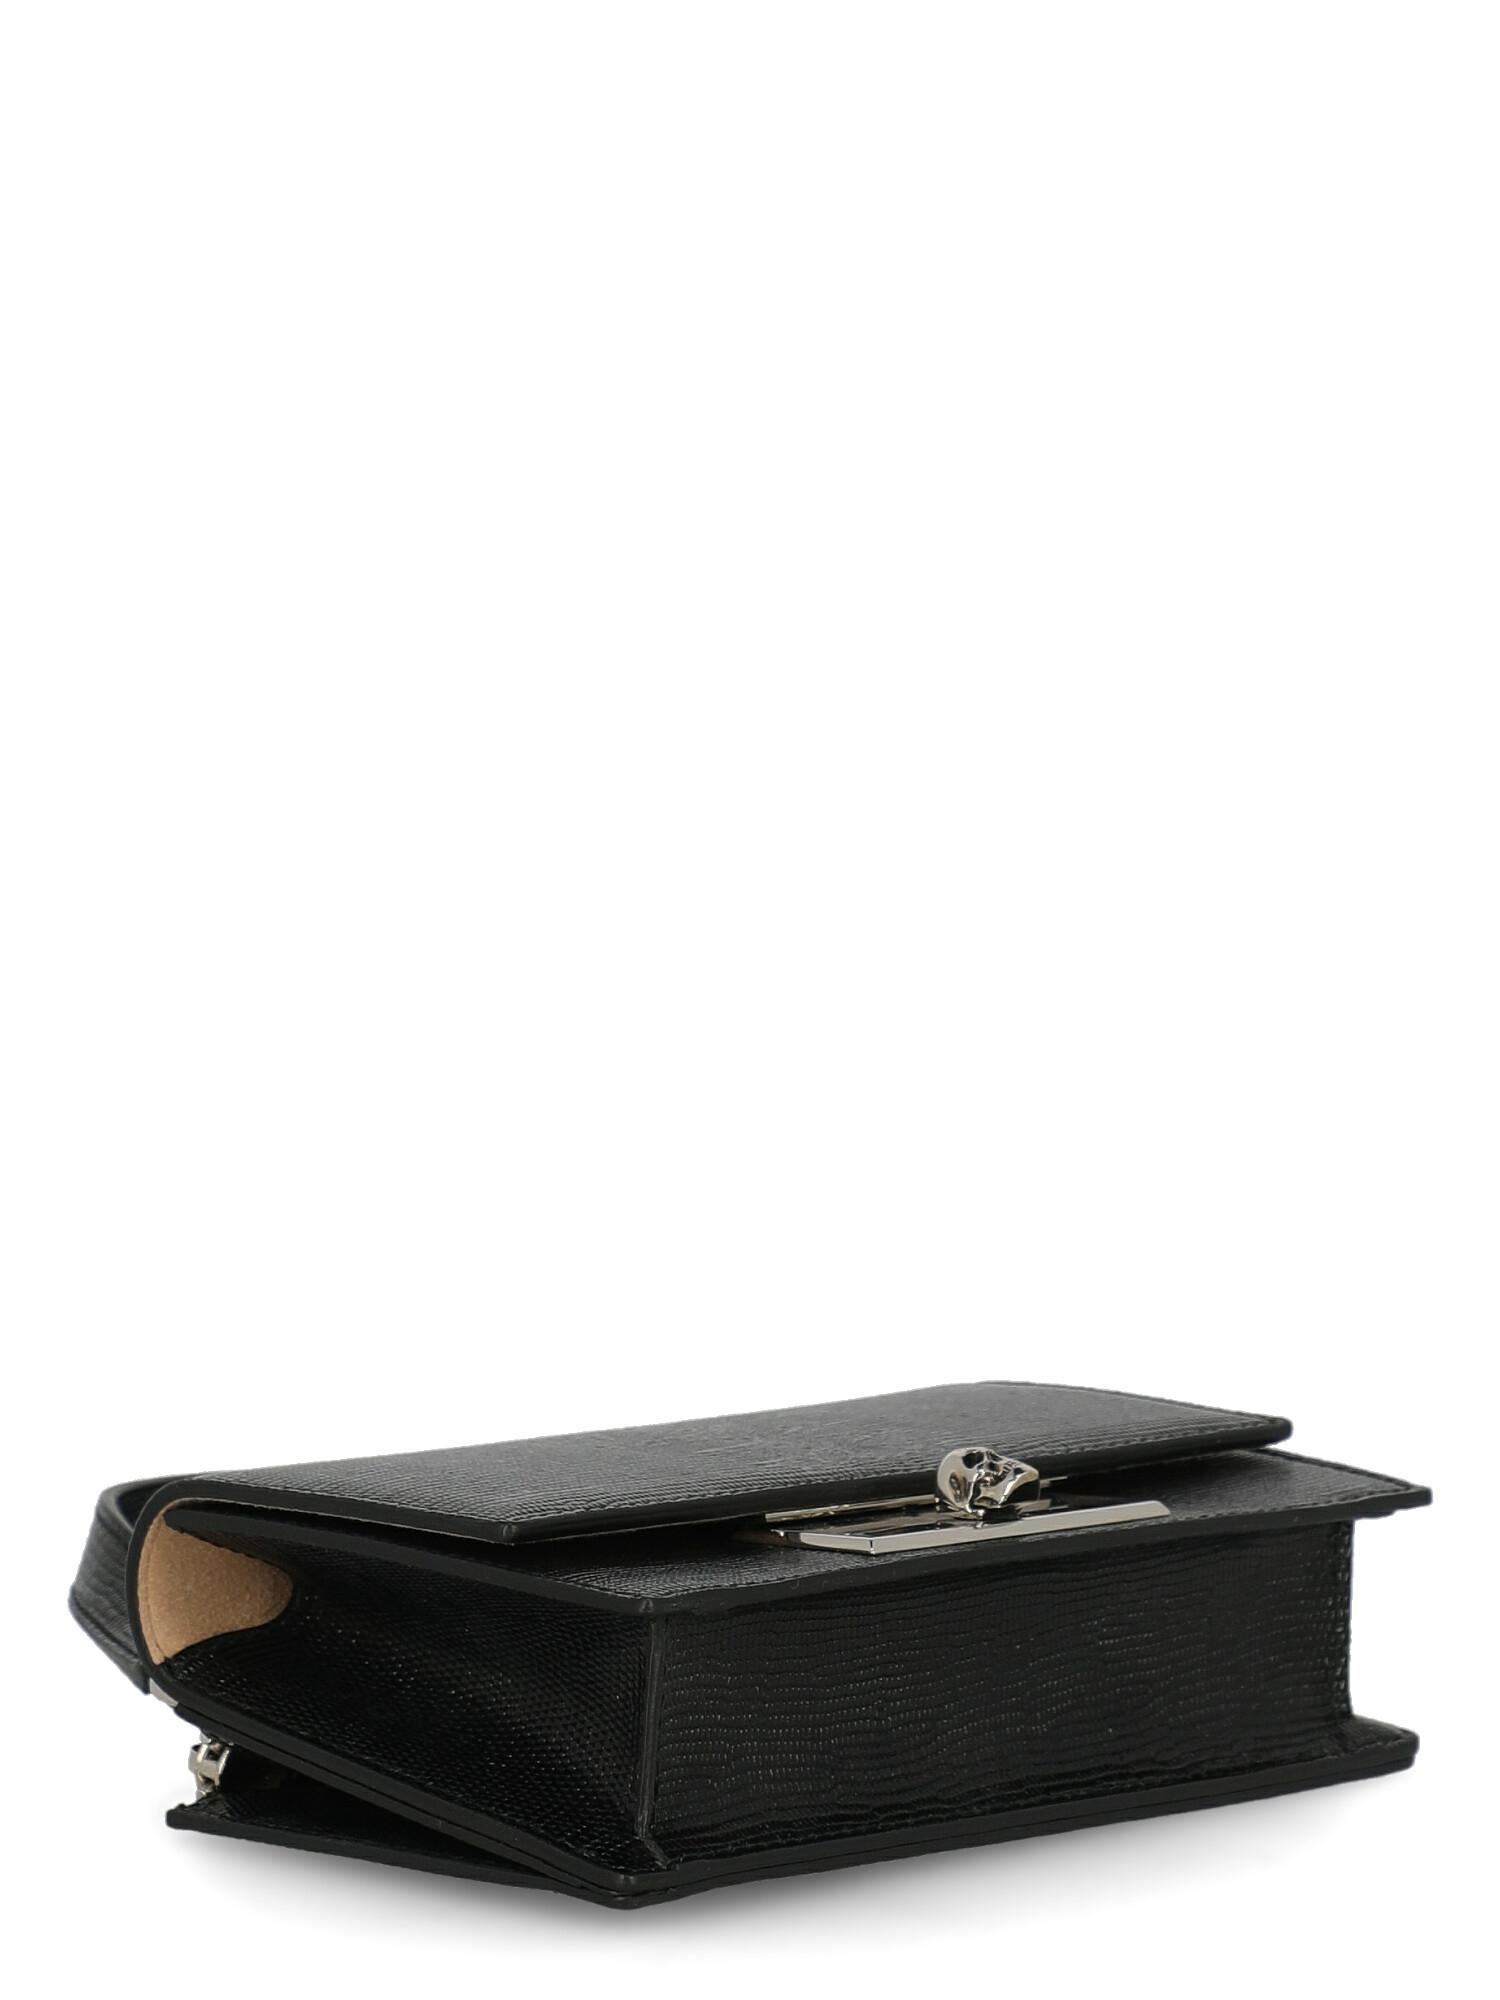 Alexander Mcqueen Woman Handbag Black Leather For Sale 1